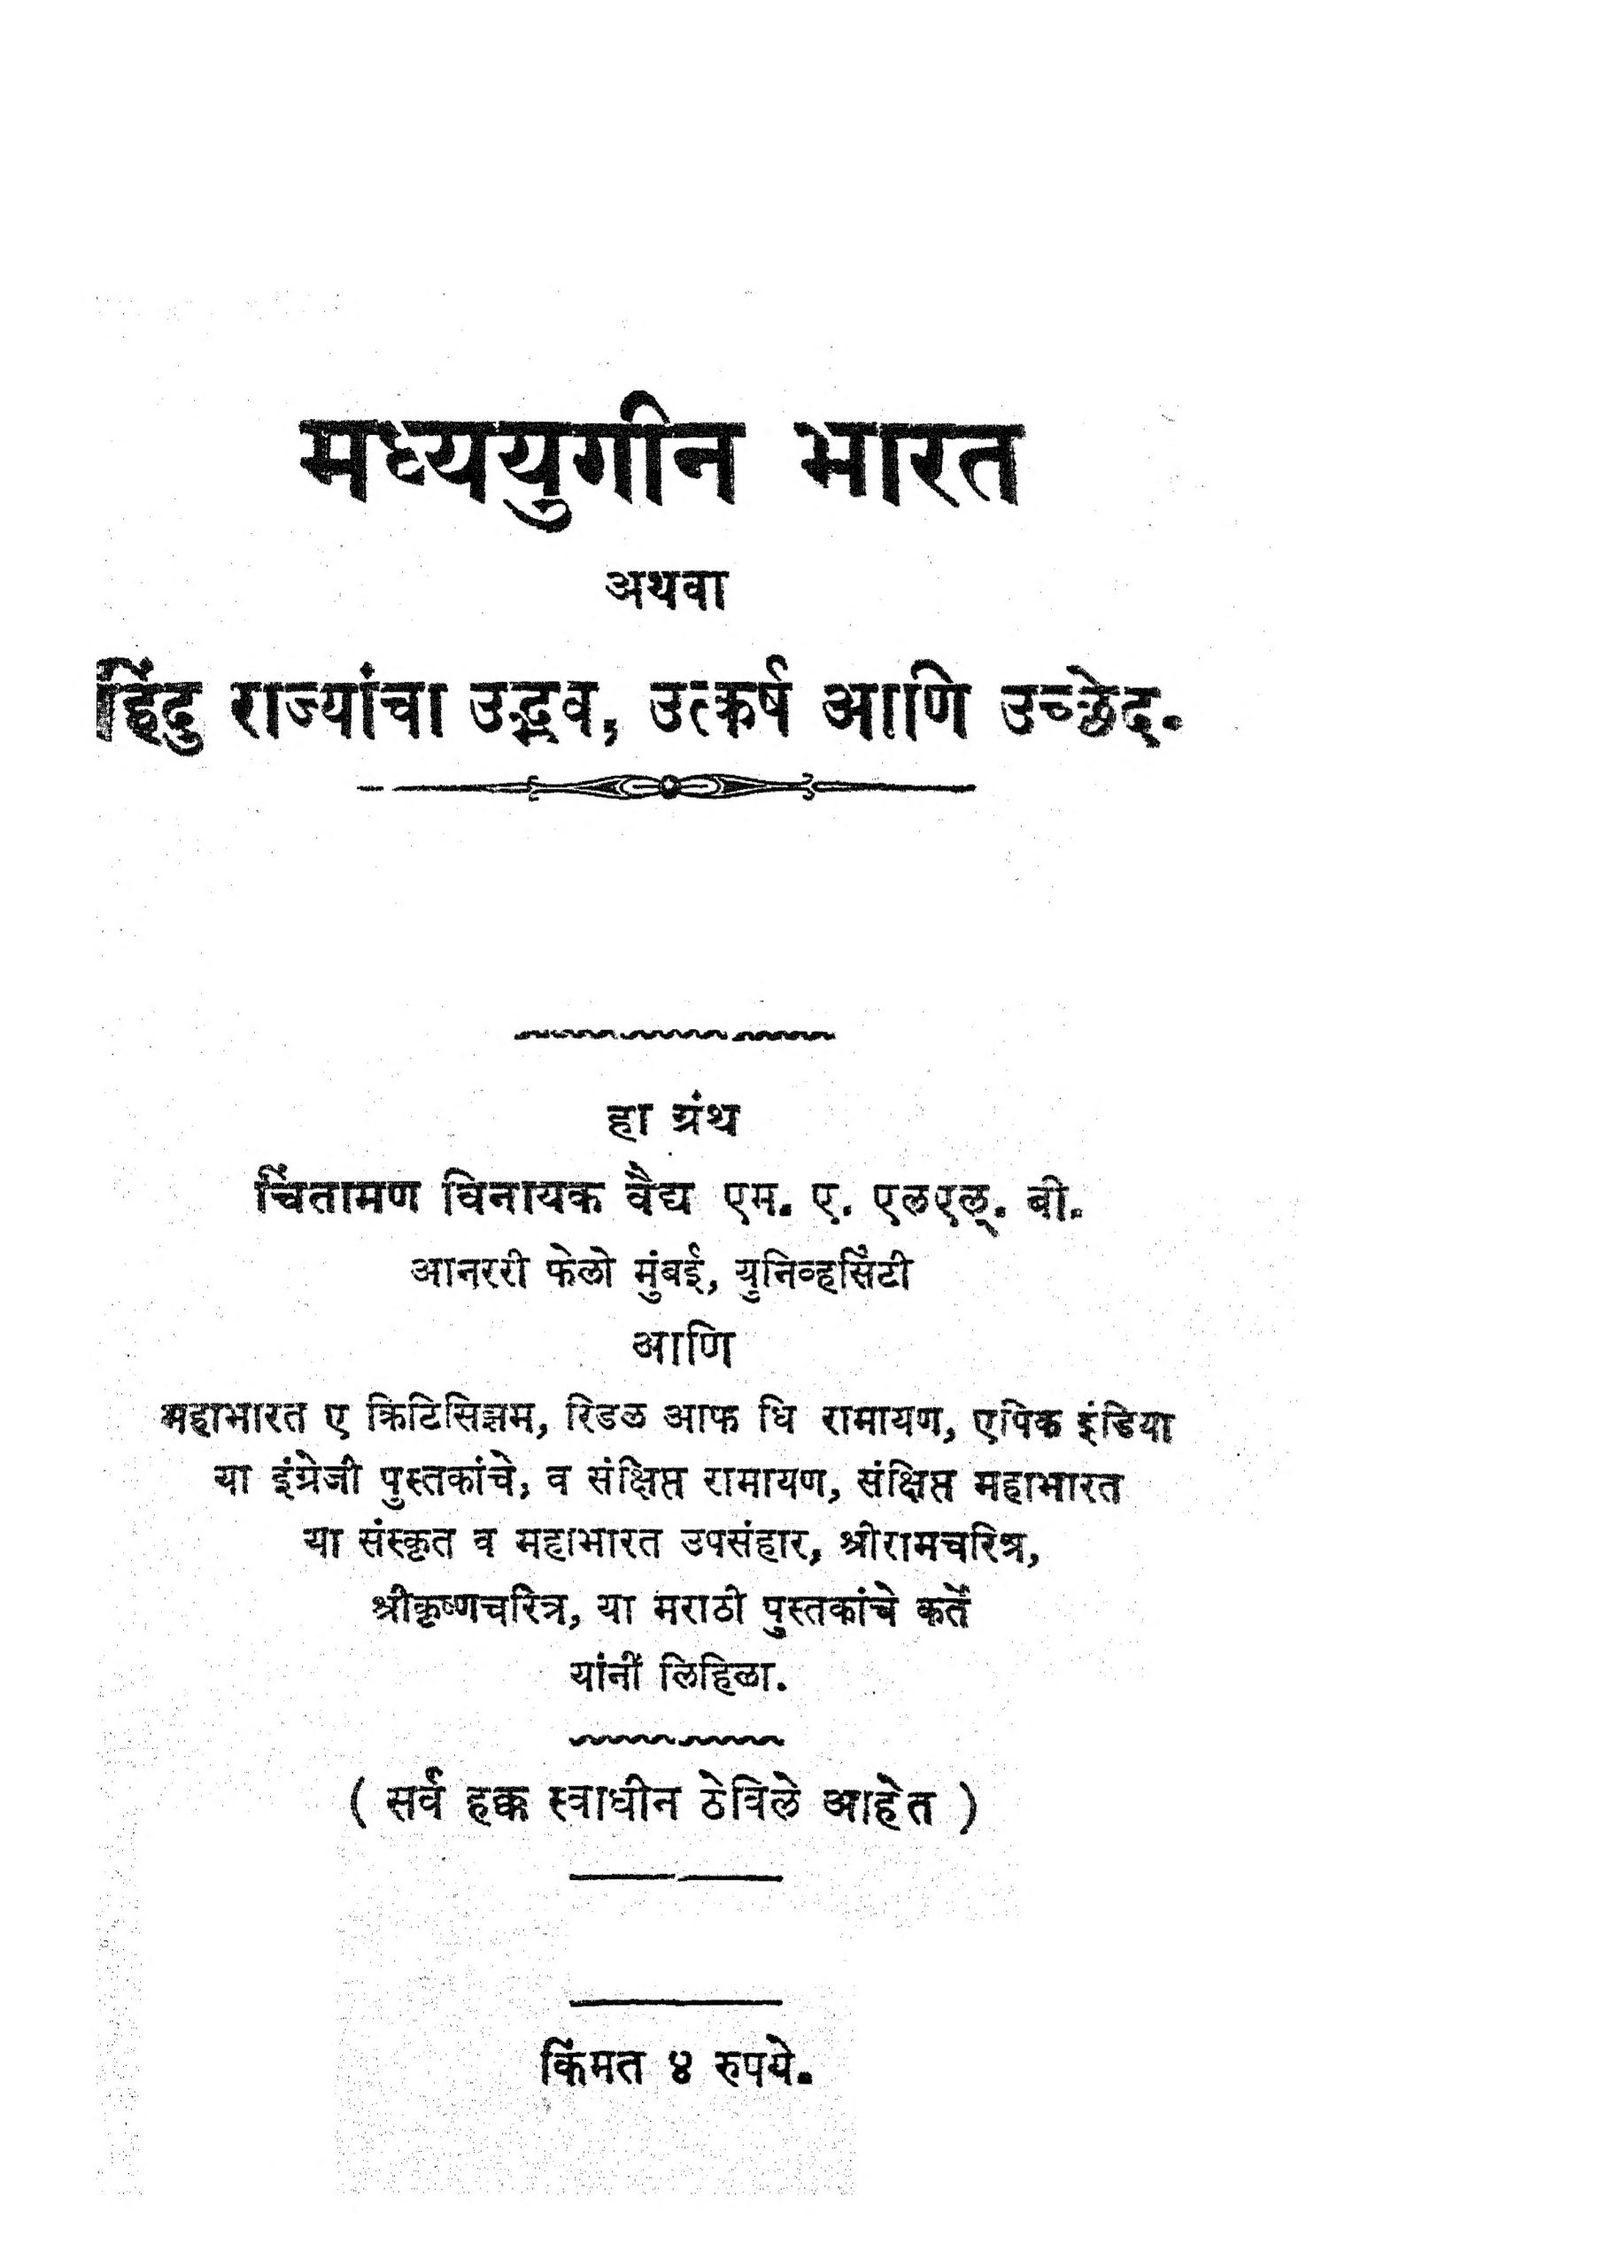 Madhyayugeen Bharat